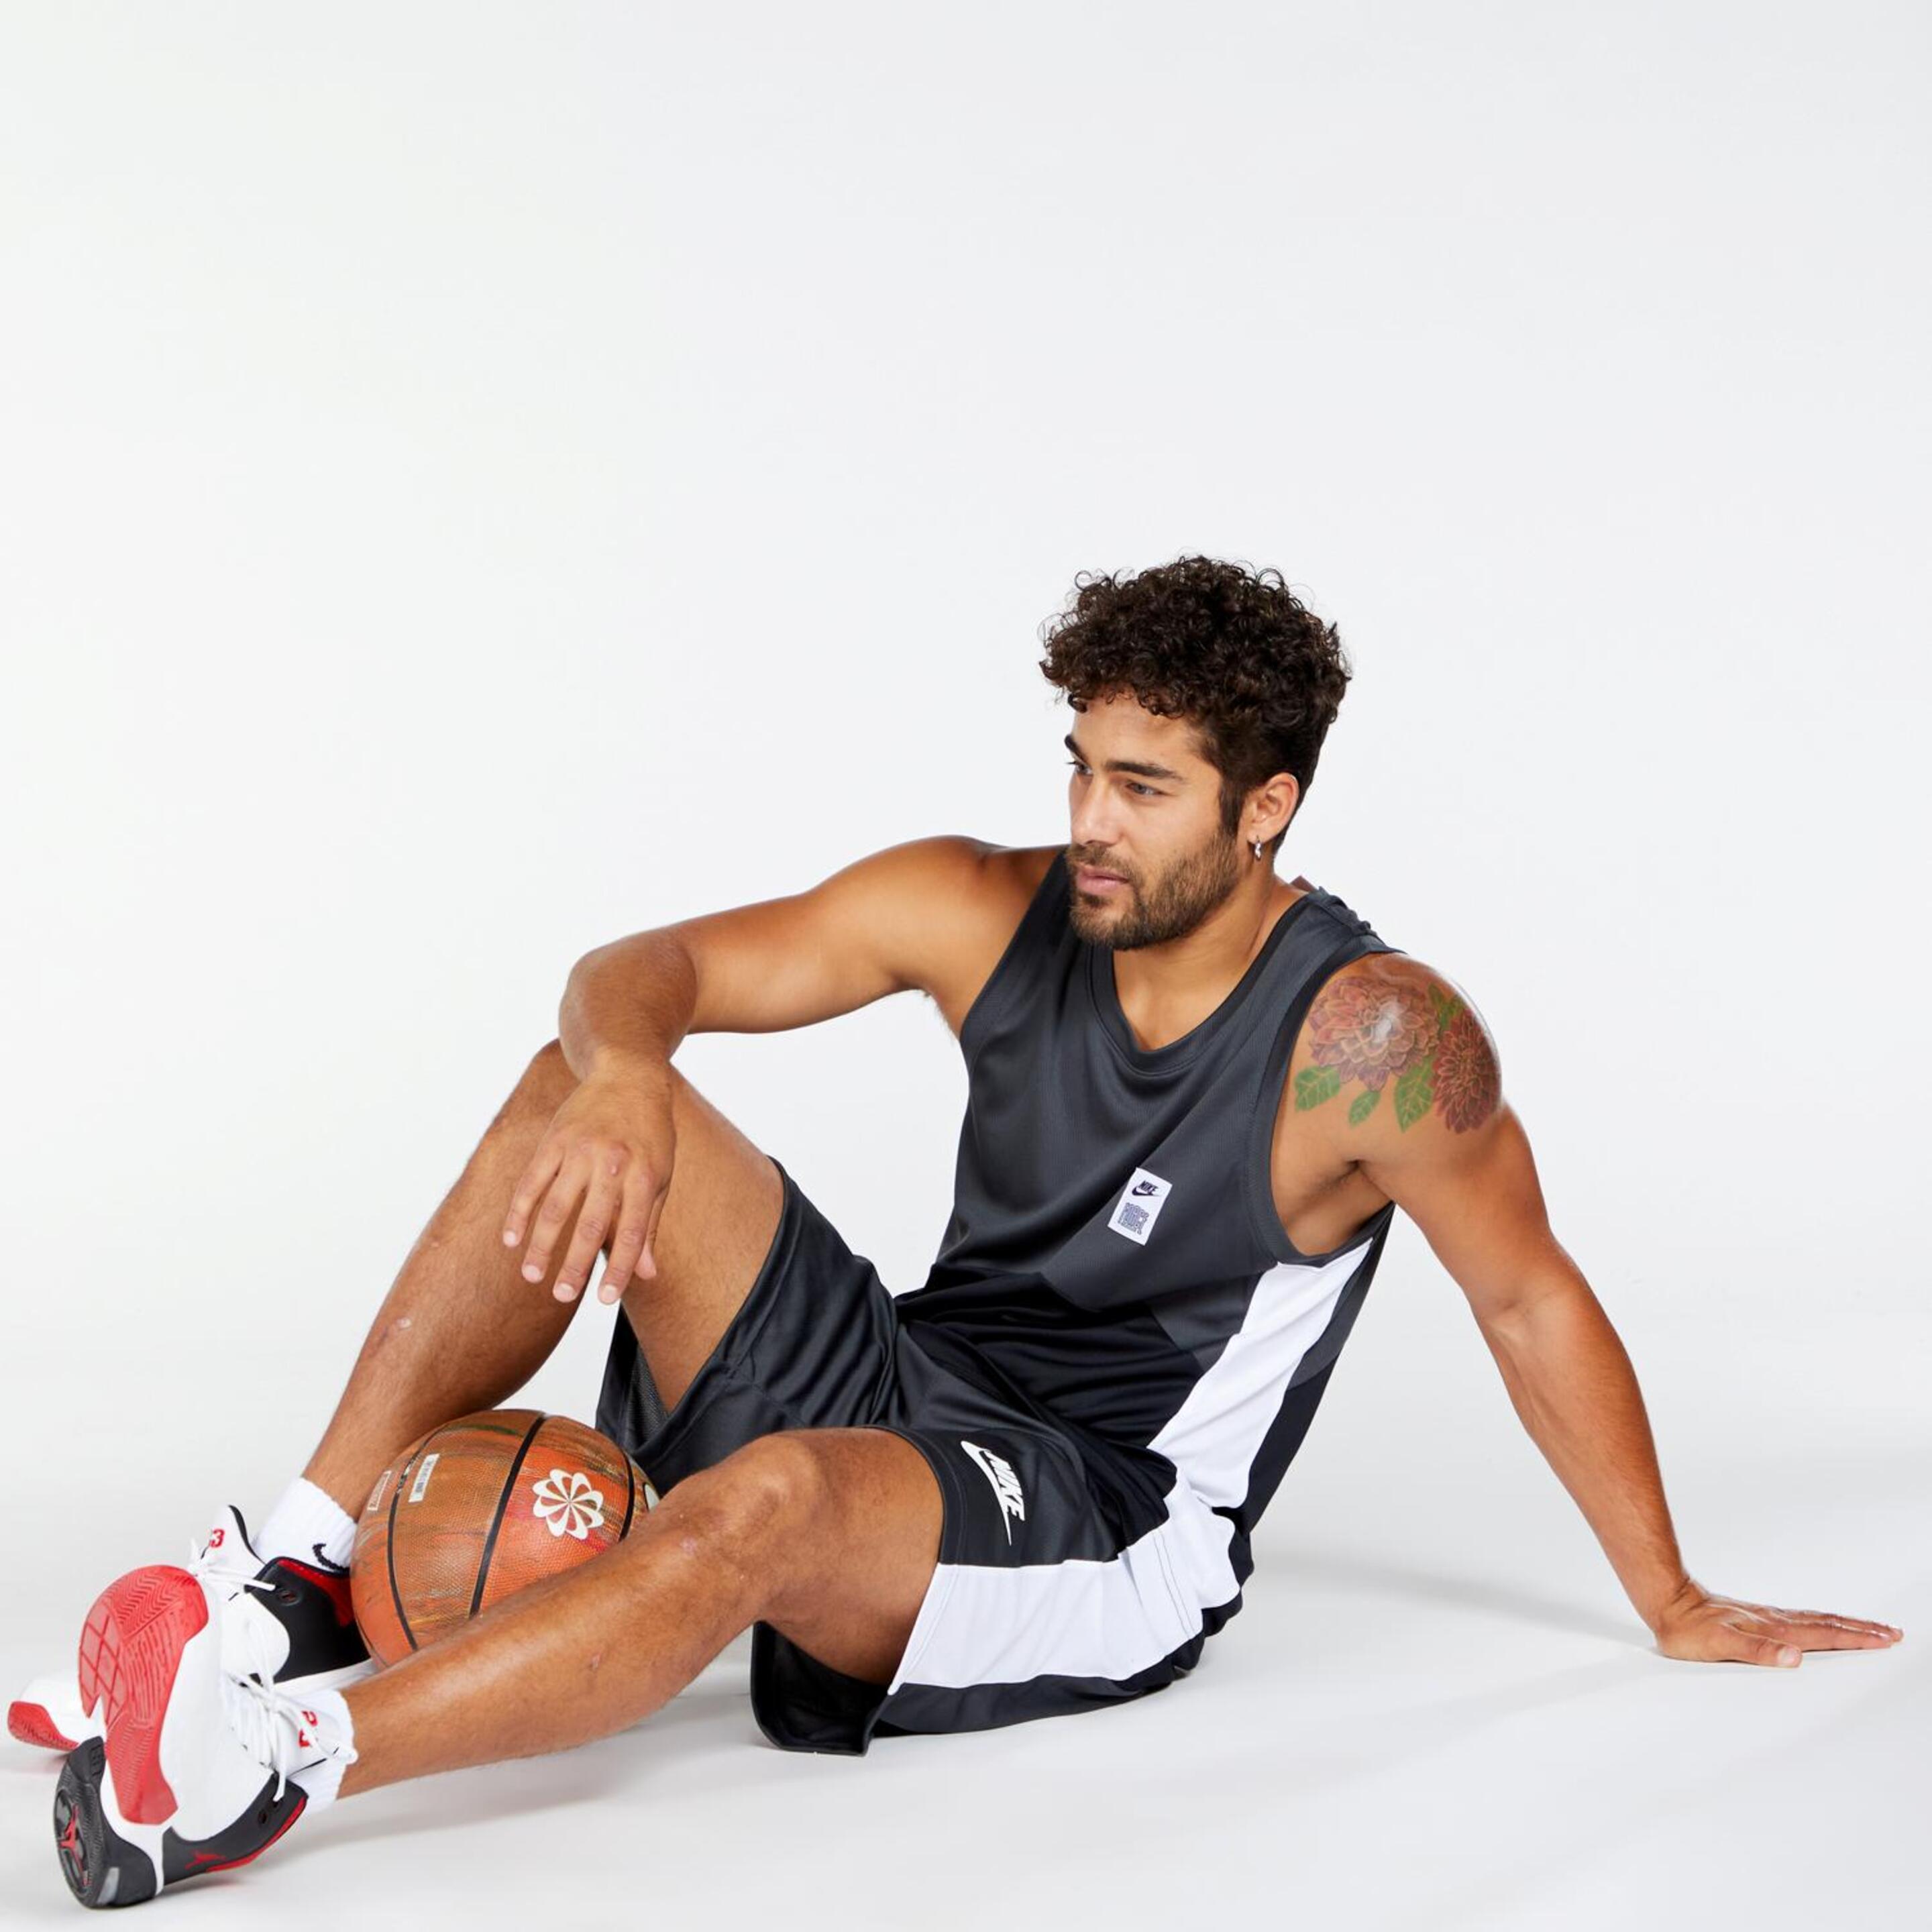 Nike Starting 5 - Negro - Pantalón Basket Hombre